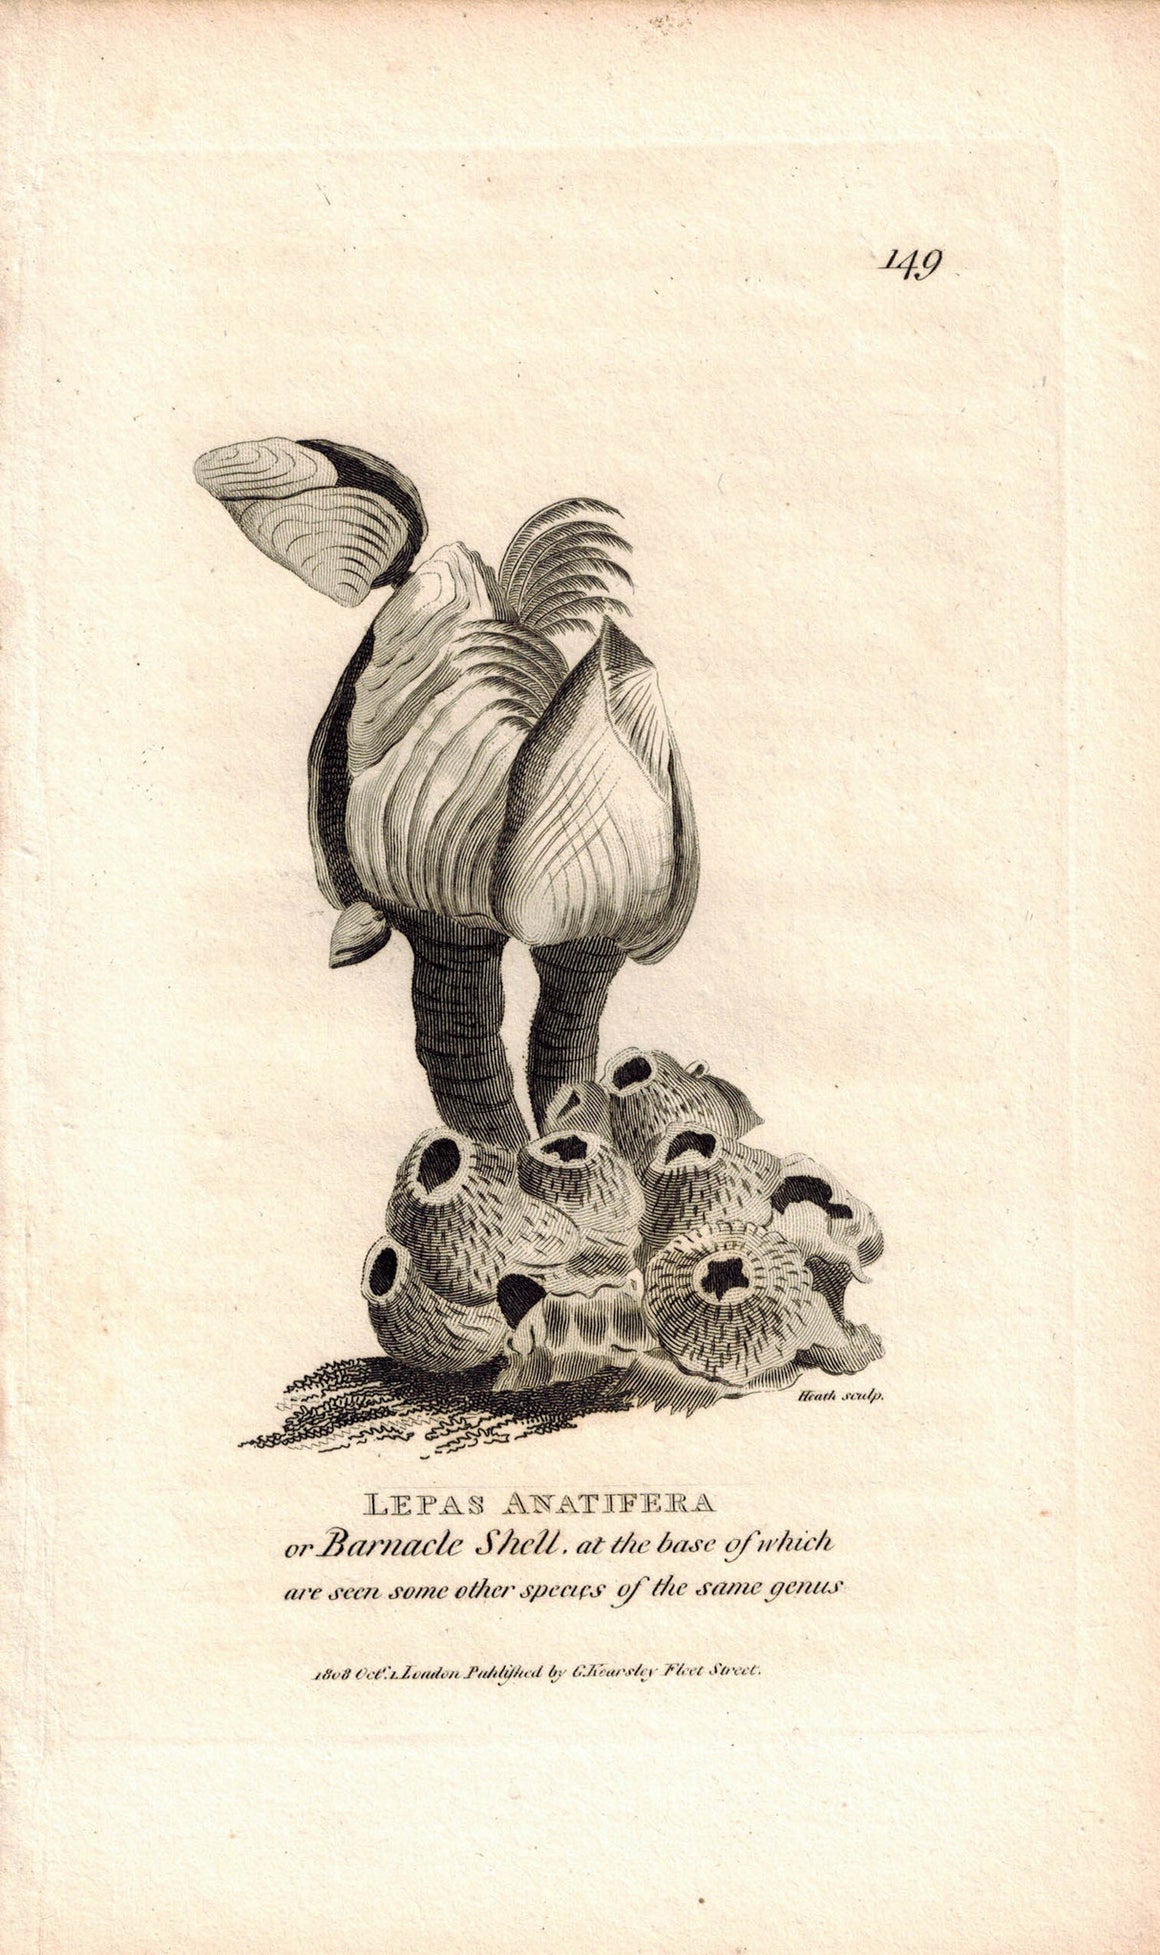 Barnacle Shell Lepas Anatifera 1809 Original Engraving Print by Shaw & Griffith